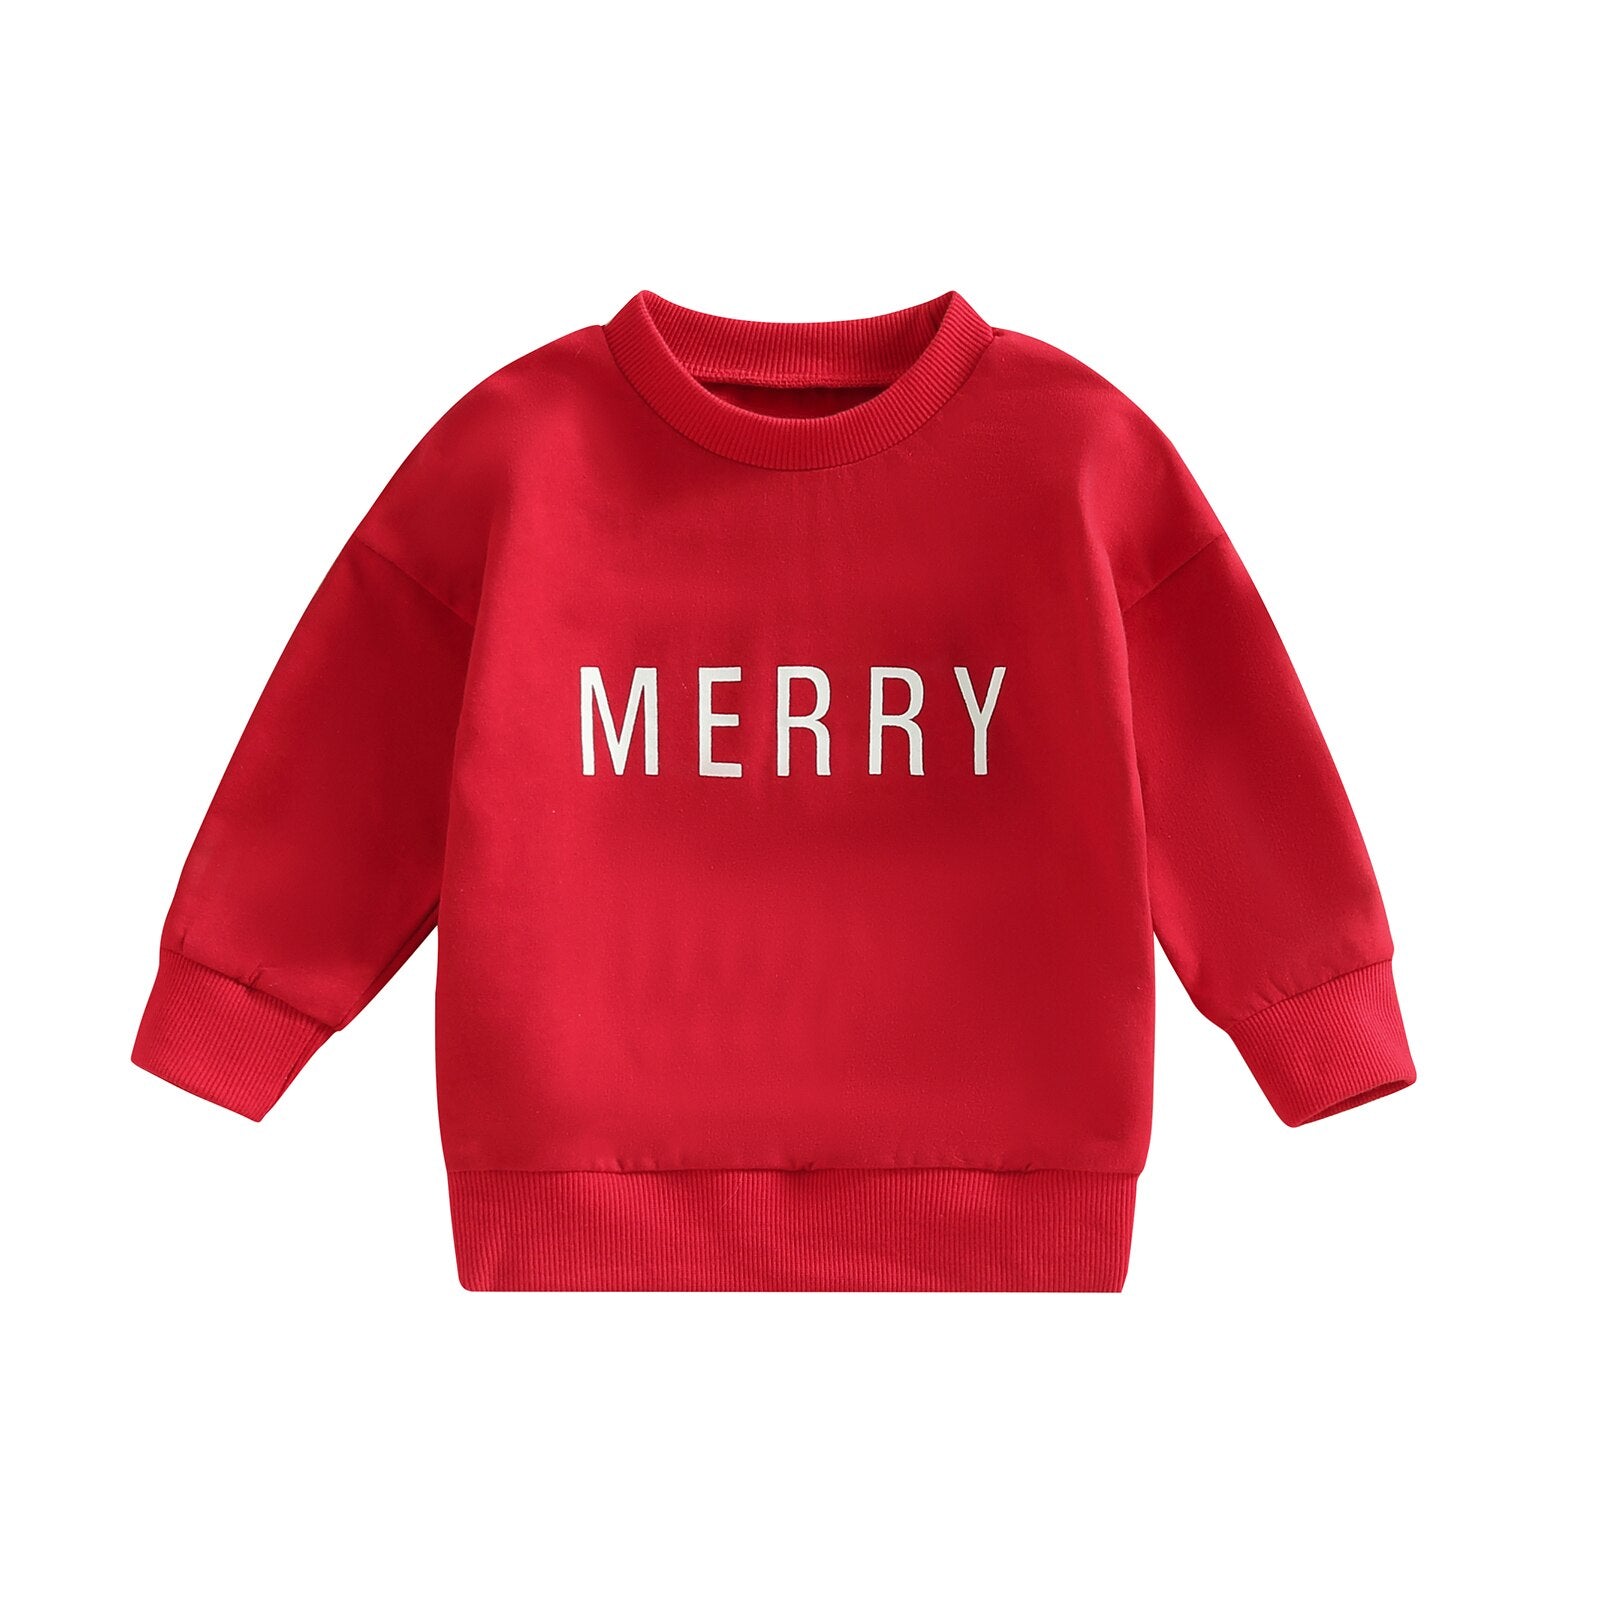 Merry Minimalist Christmas Toddler Top